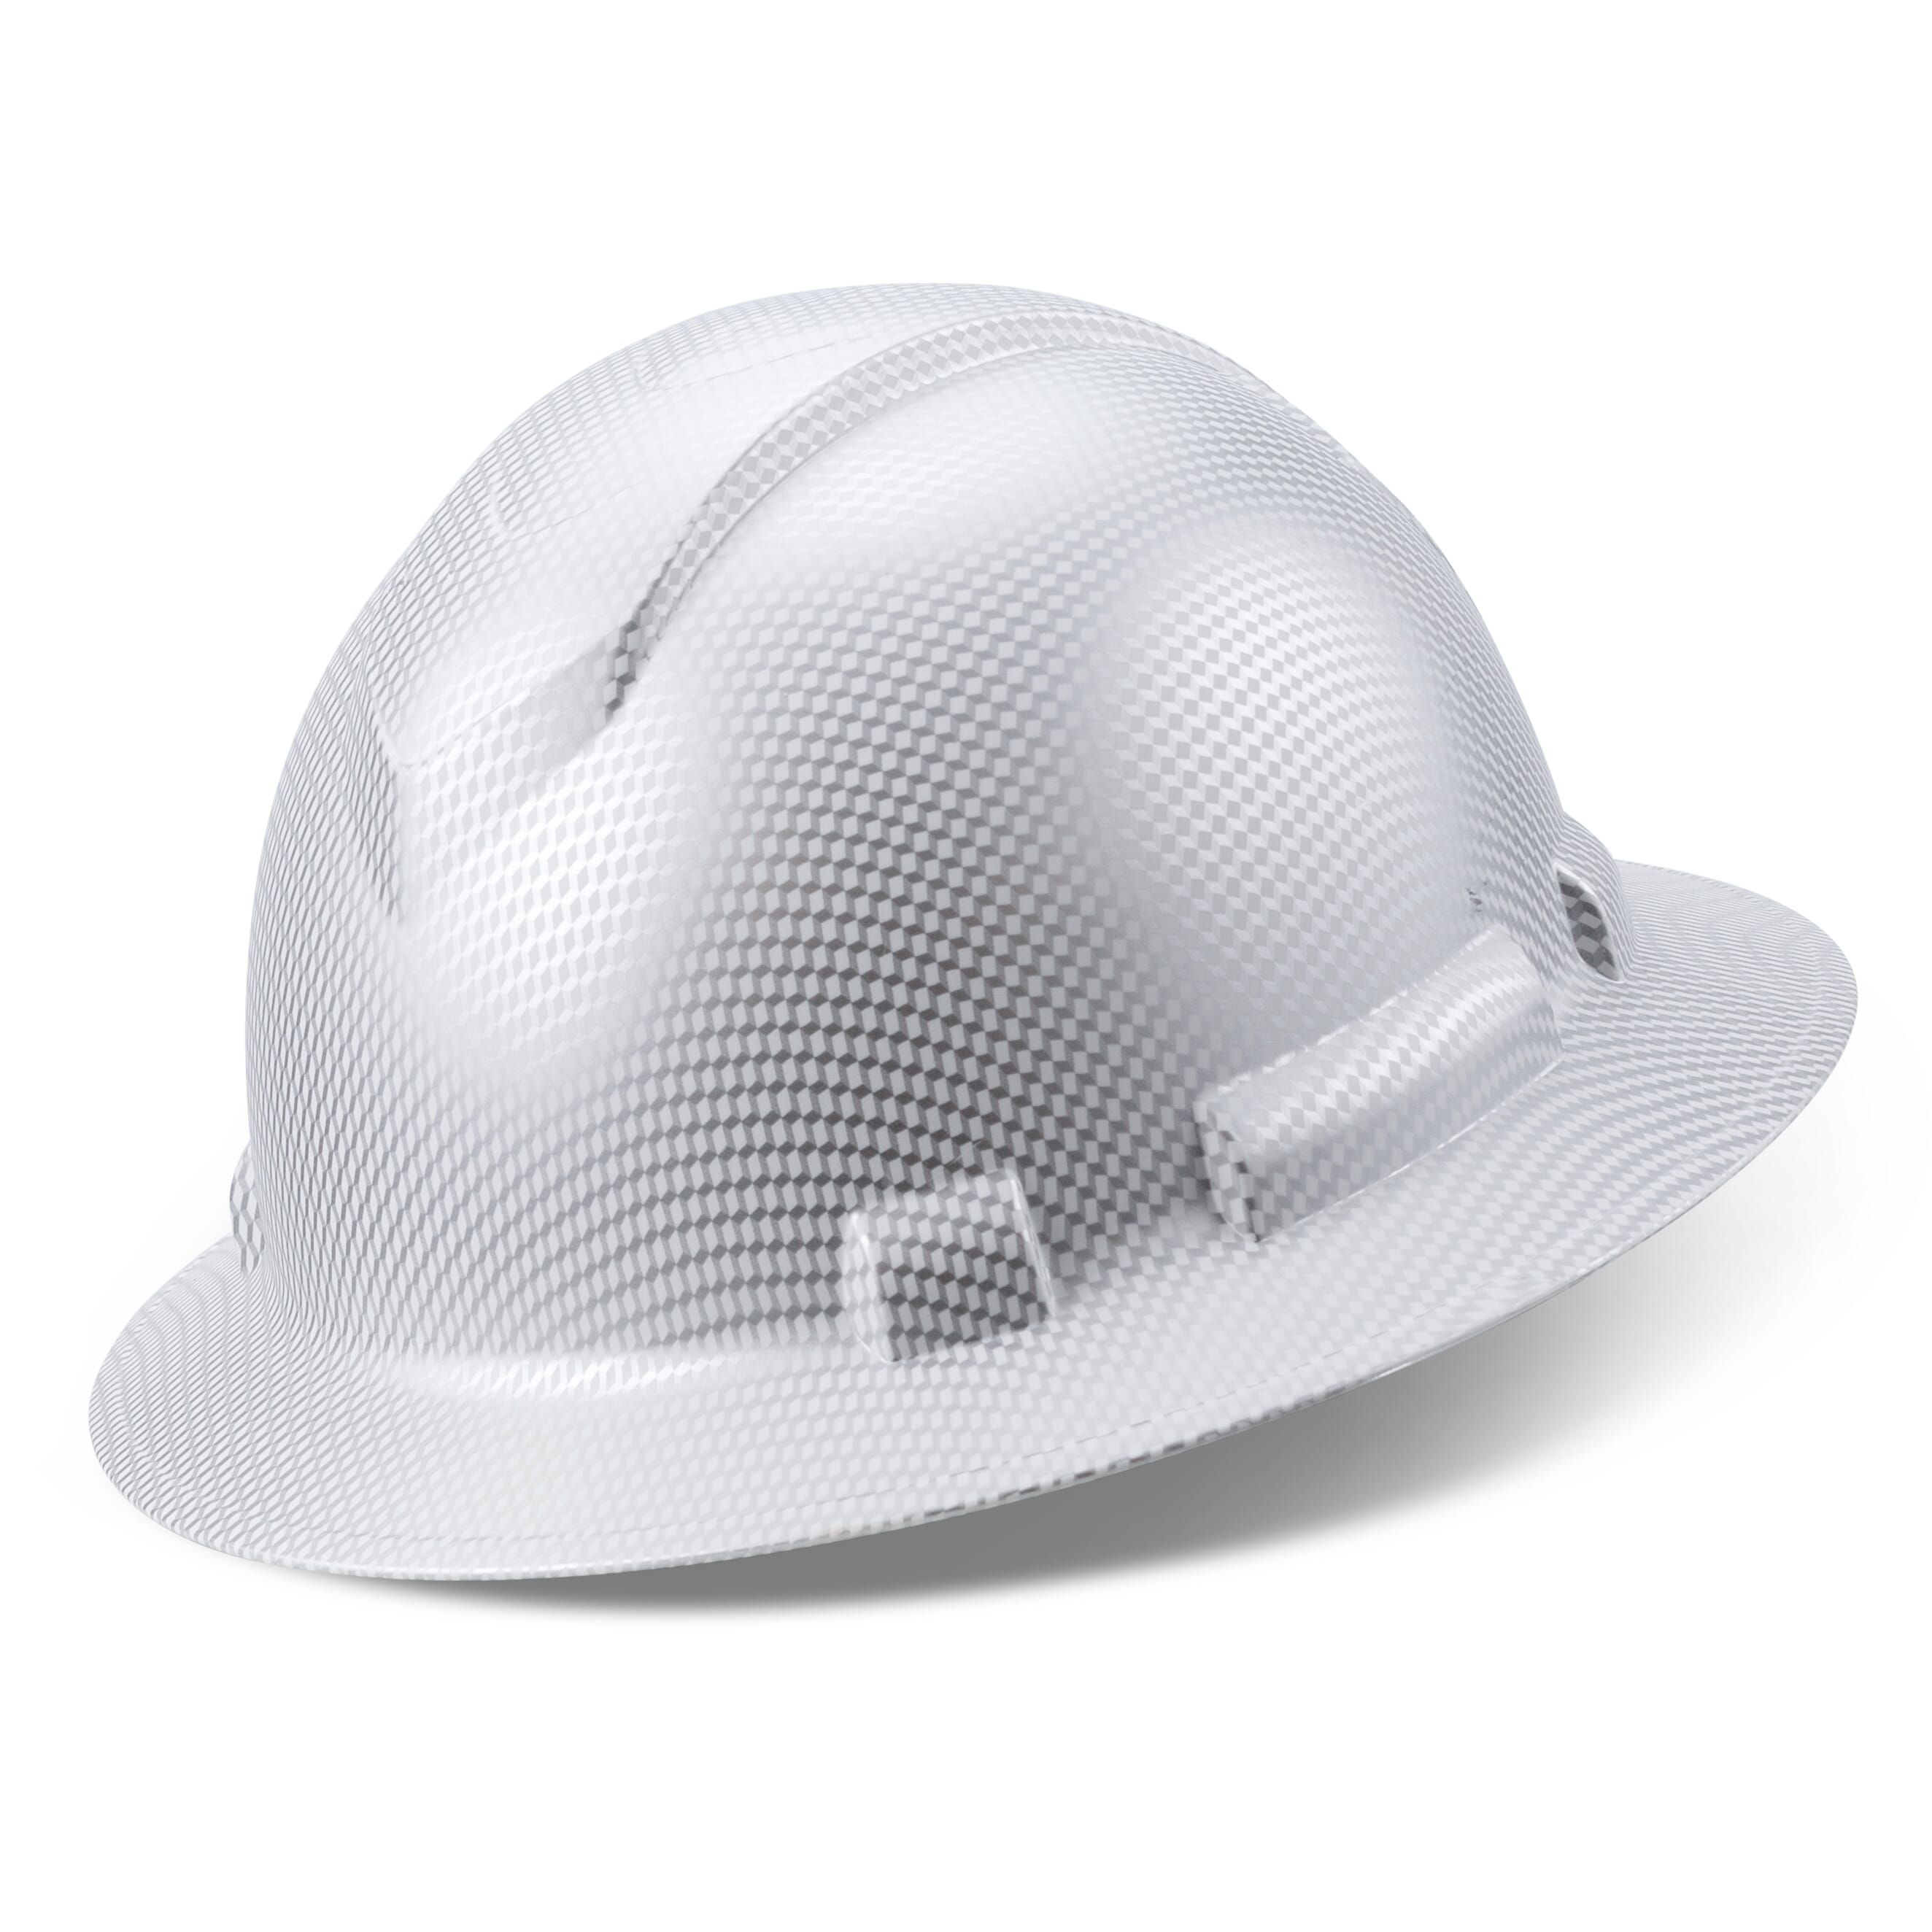 Full Brim Pyramex Hard Hat, Custom Ice Cube Platinum Design, Safety Helmet, 6 Point